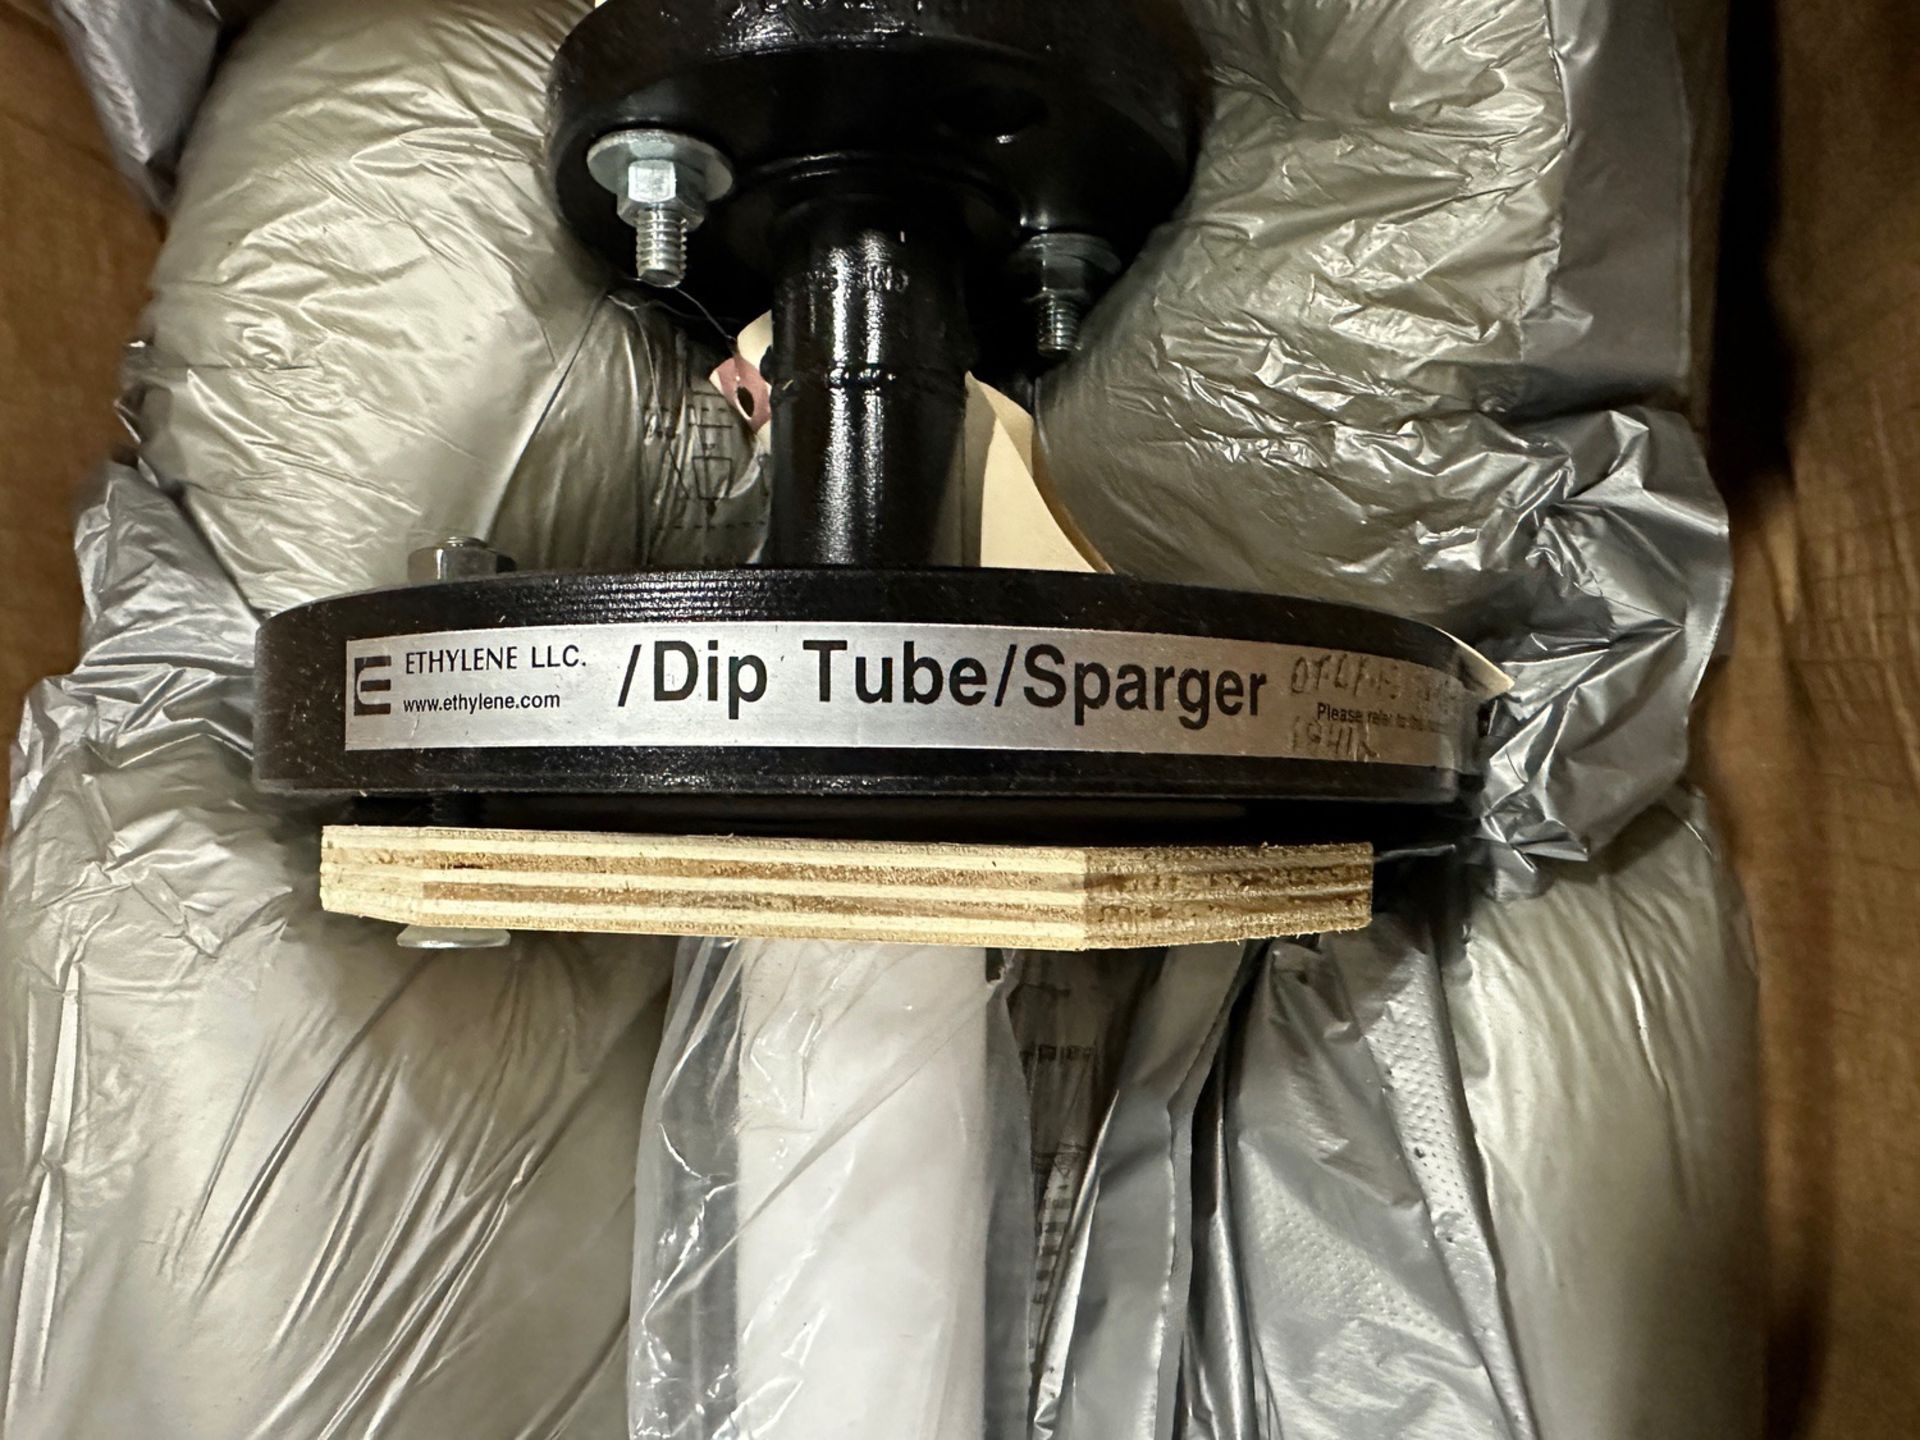 Ethylene PTFE Dip Tube / Sparger (1" x 3" x 30") | Rig Fee $15 - Image 2 of 3